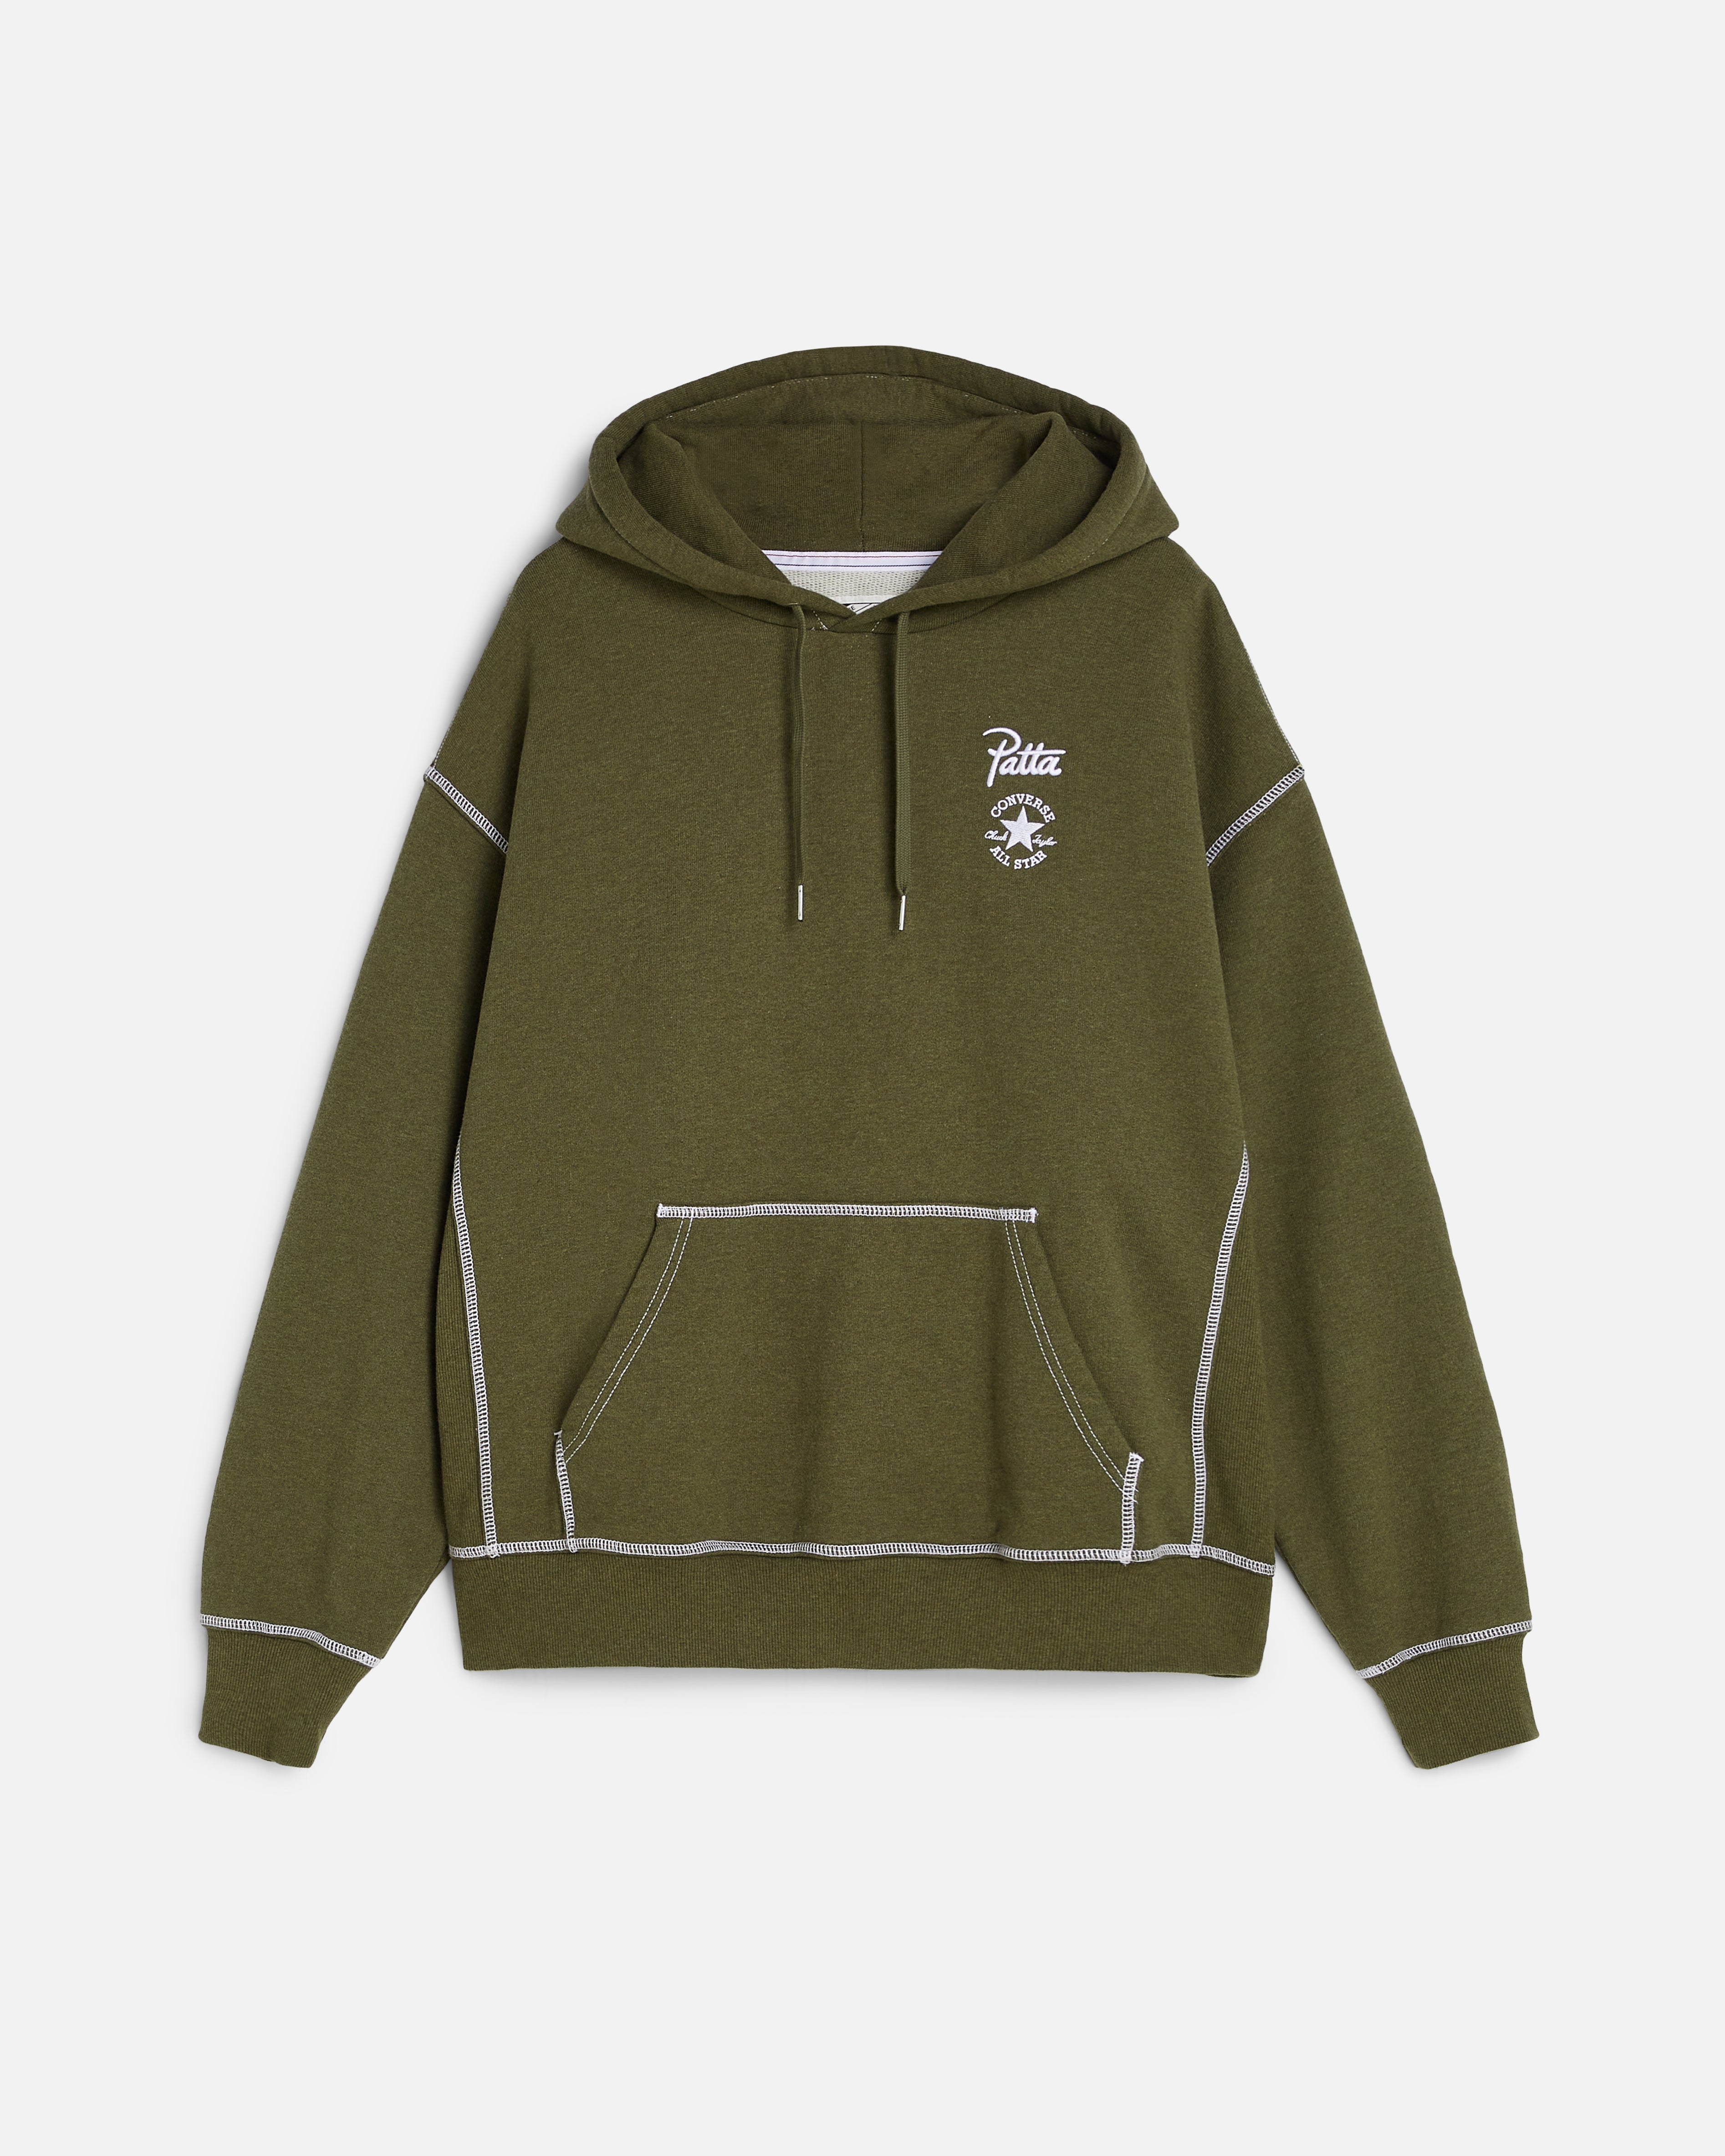 Patta x Converse Rain or Shine Hooded Sweater (Utility Green 